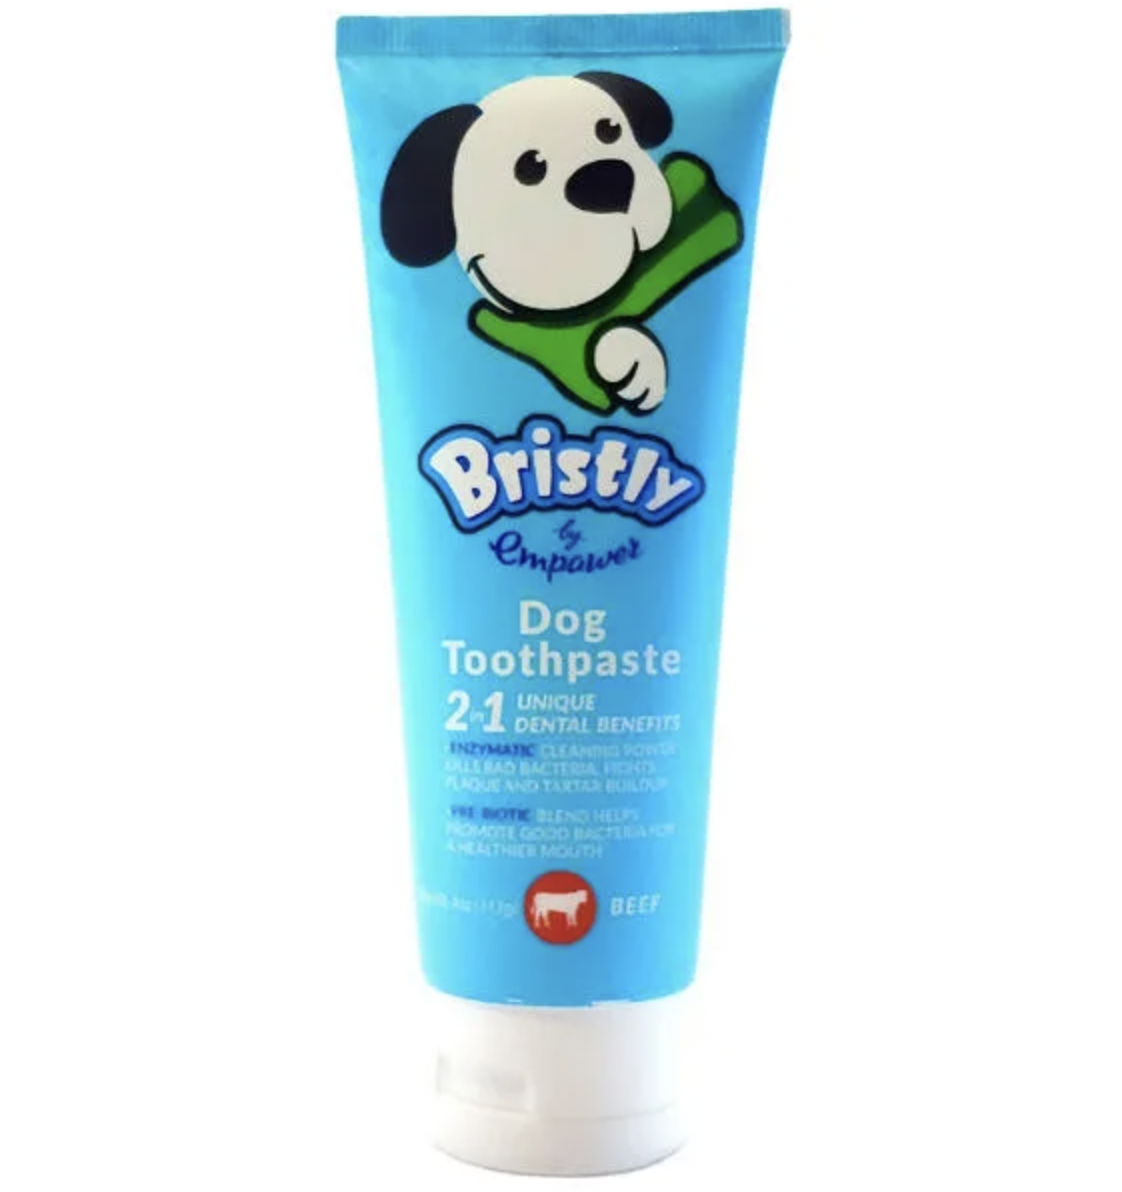 Bristly Dog Toothpaste